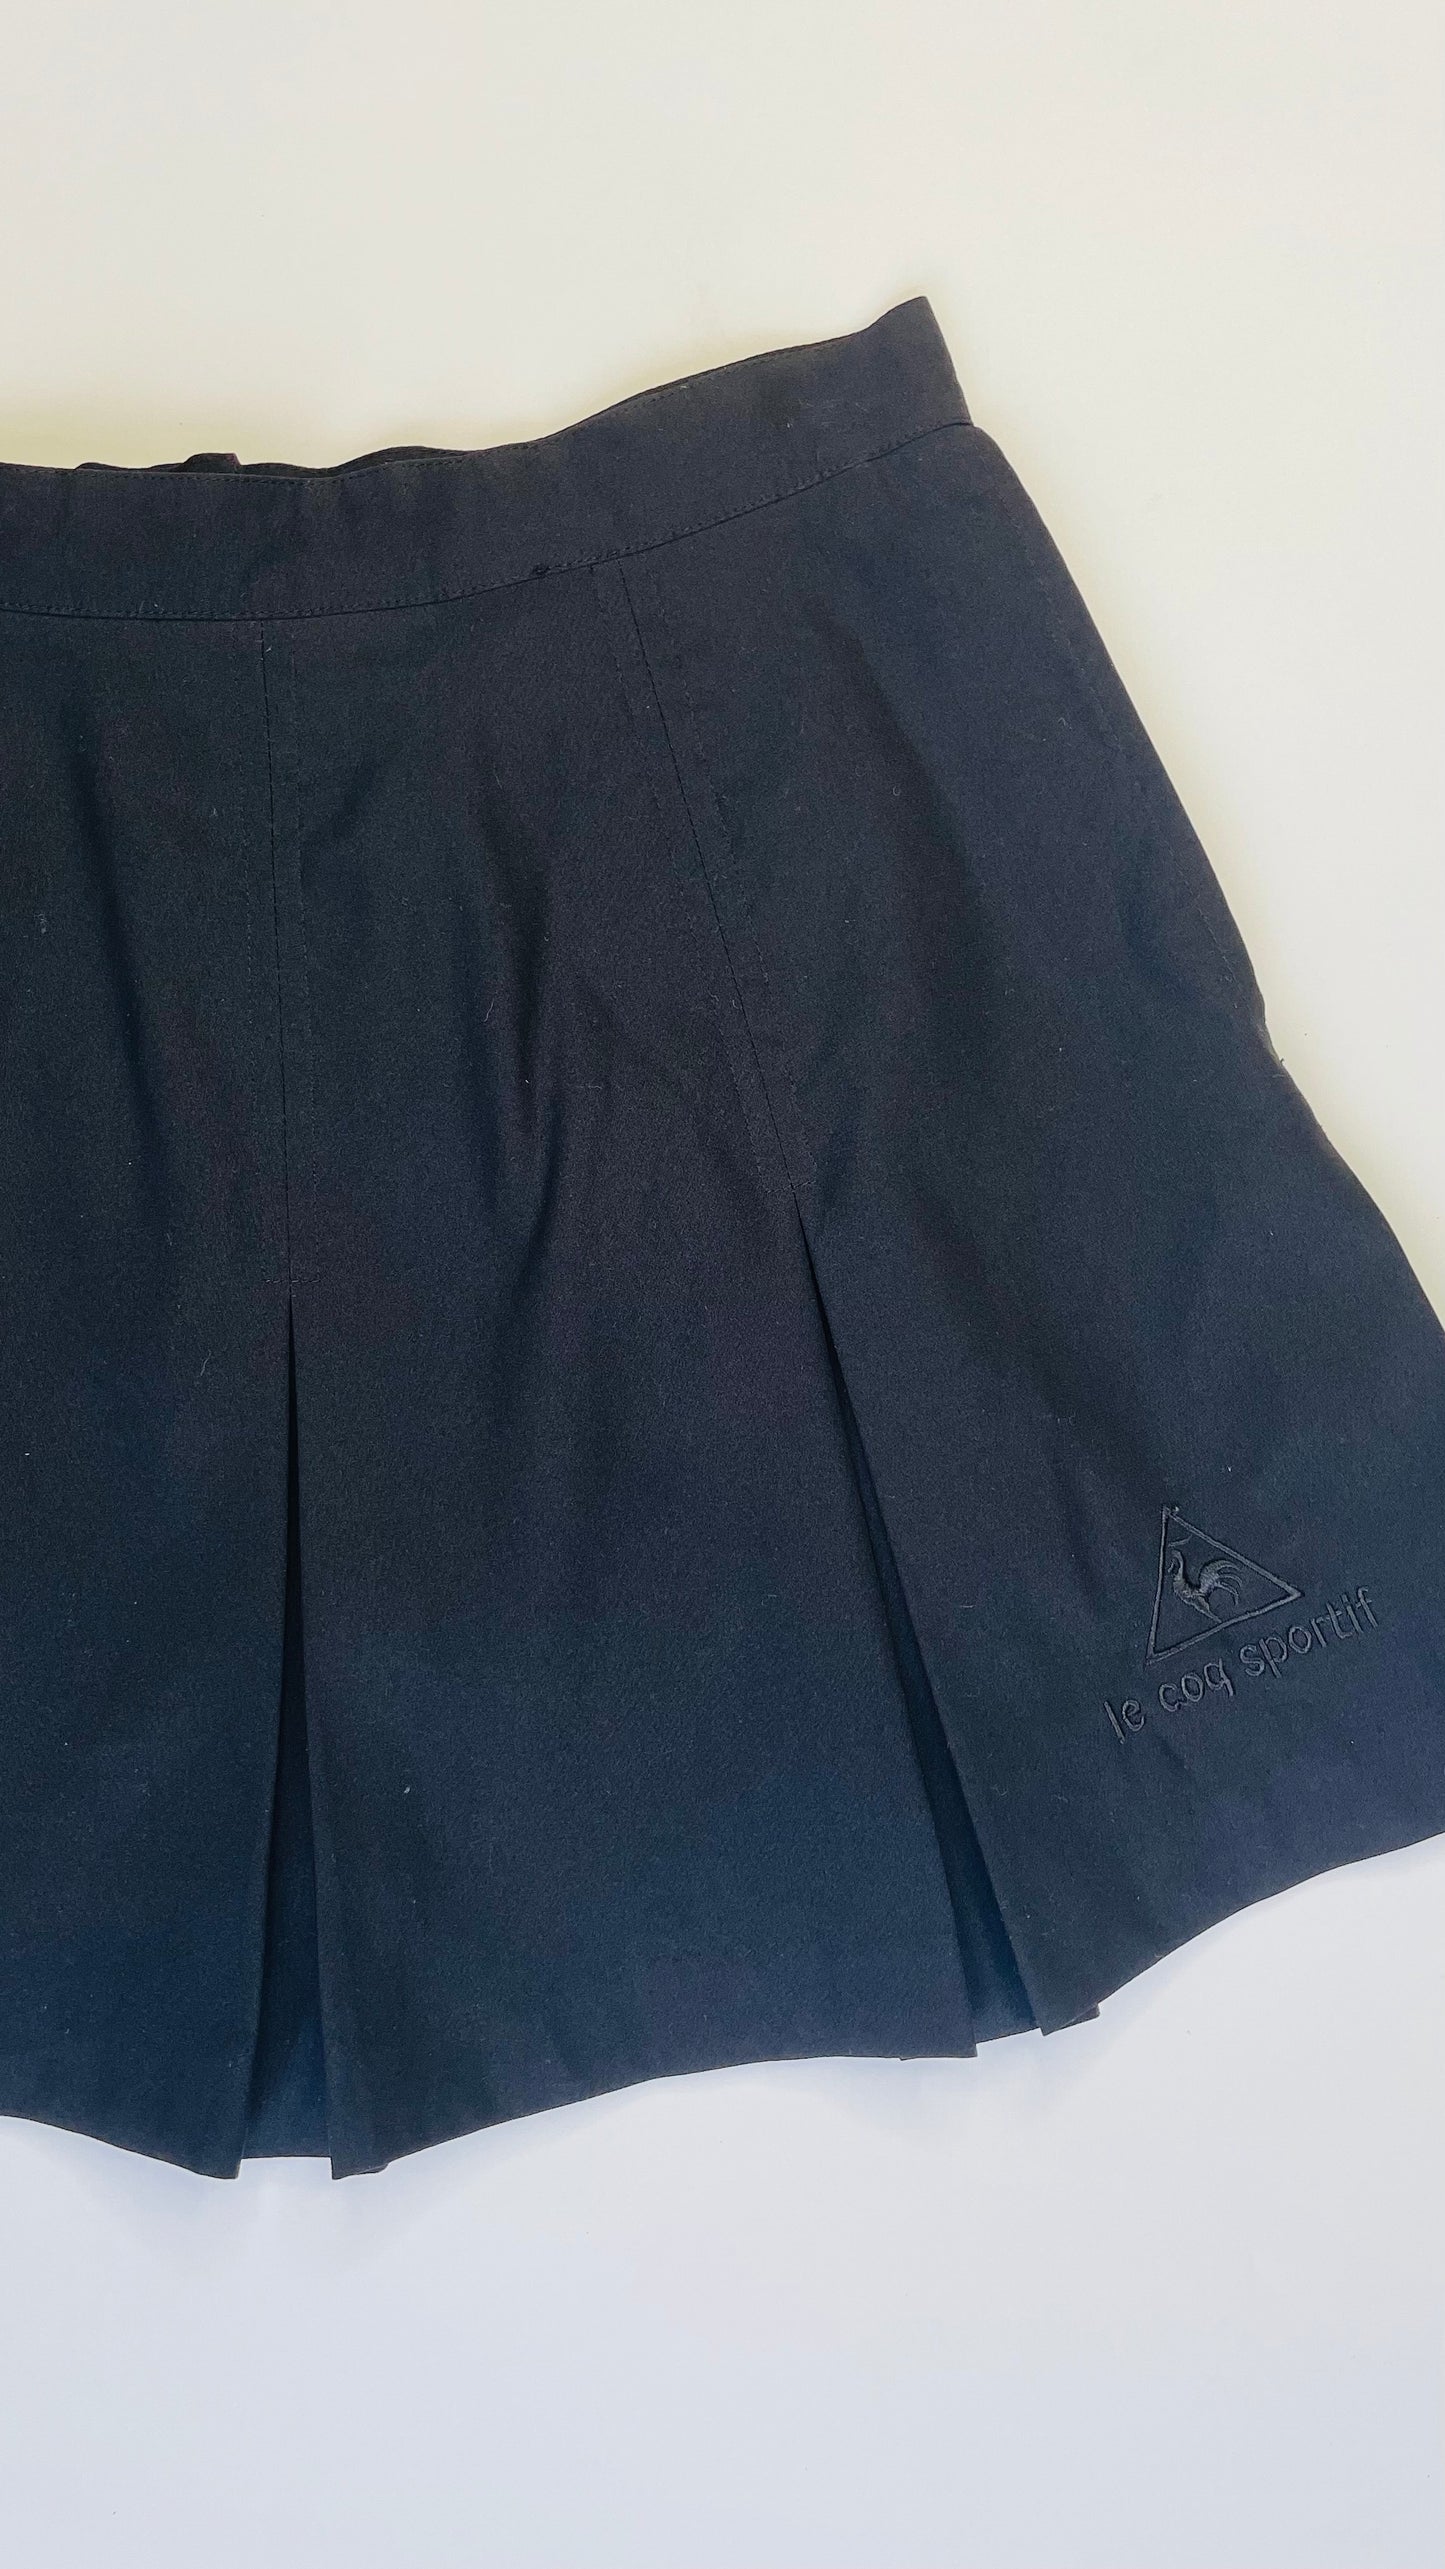 Vintage 80s Le Coq Sportif black pleated tennis skirt - Size 8